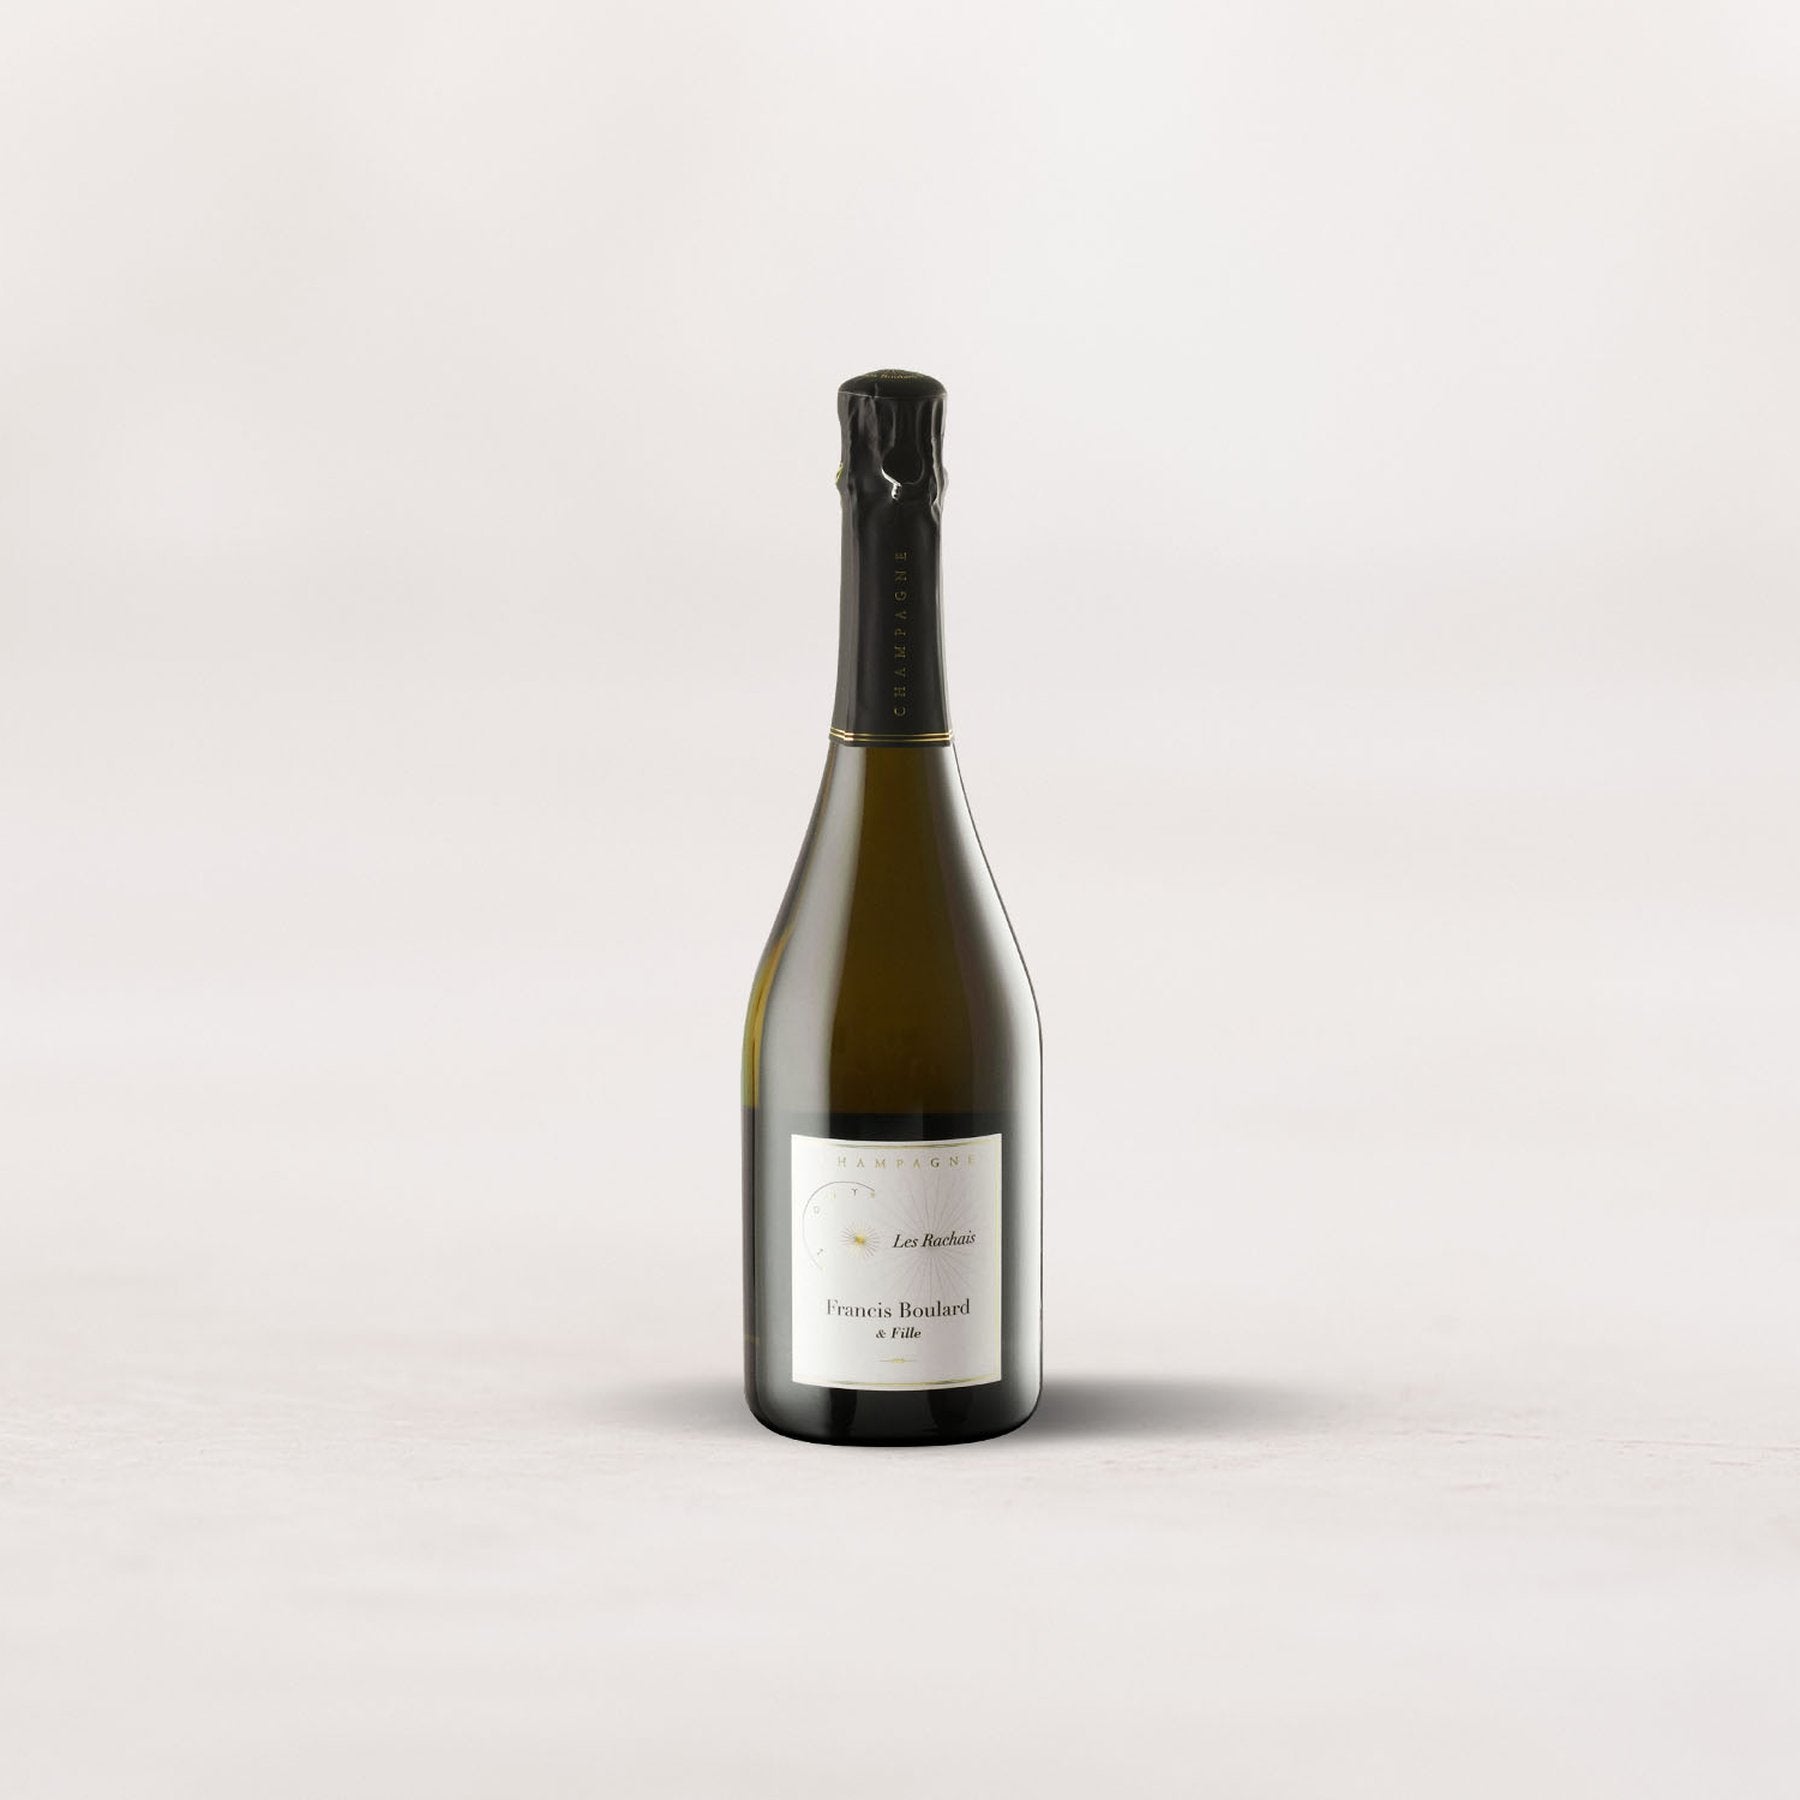 Champagne Francis Boulard & Fille, “Les Rachais”